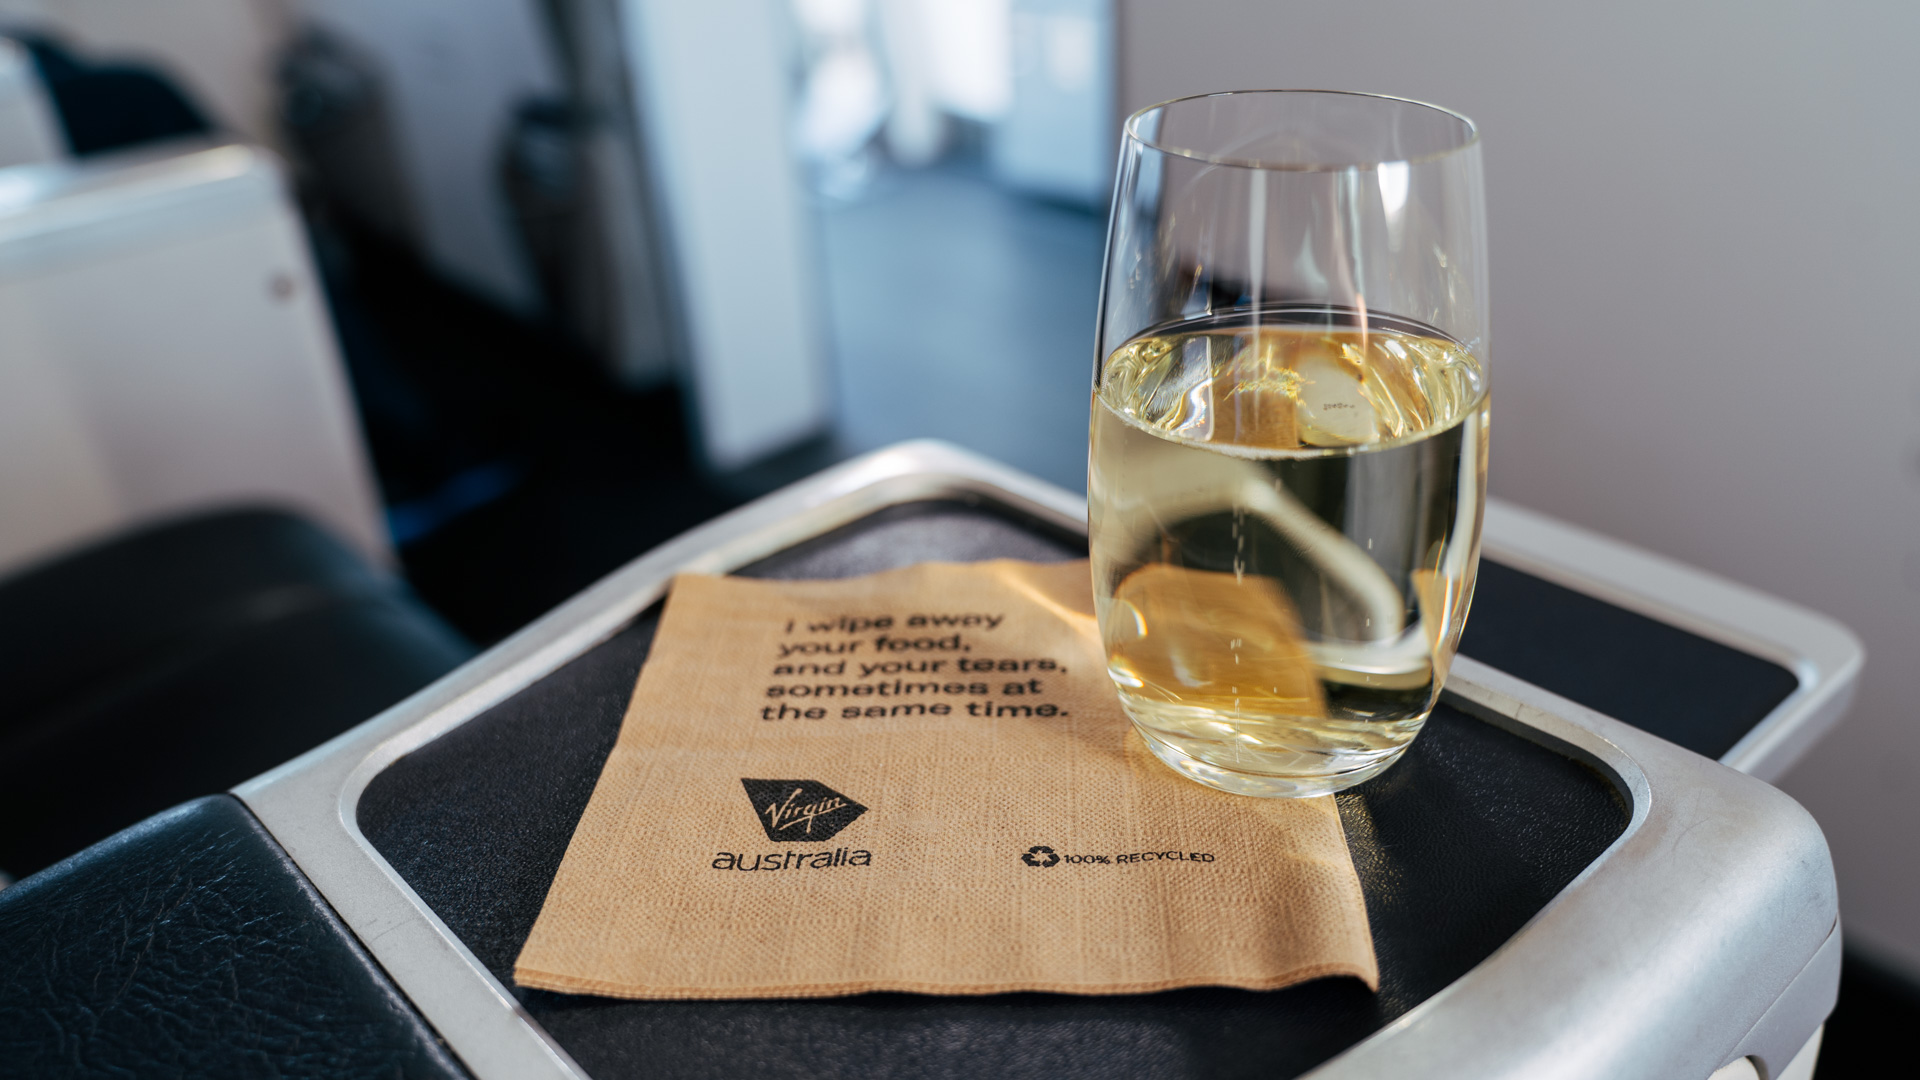 Virgin Australia 737 Business Class sparkling wine